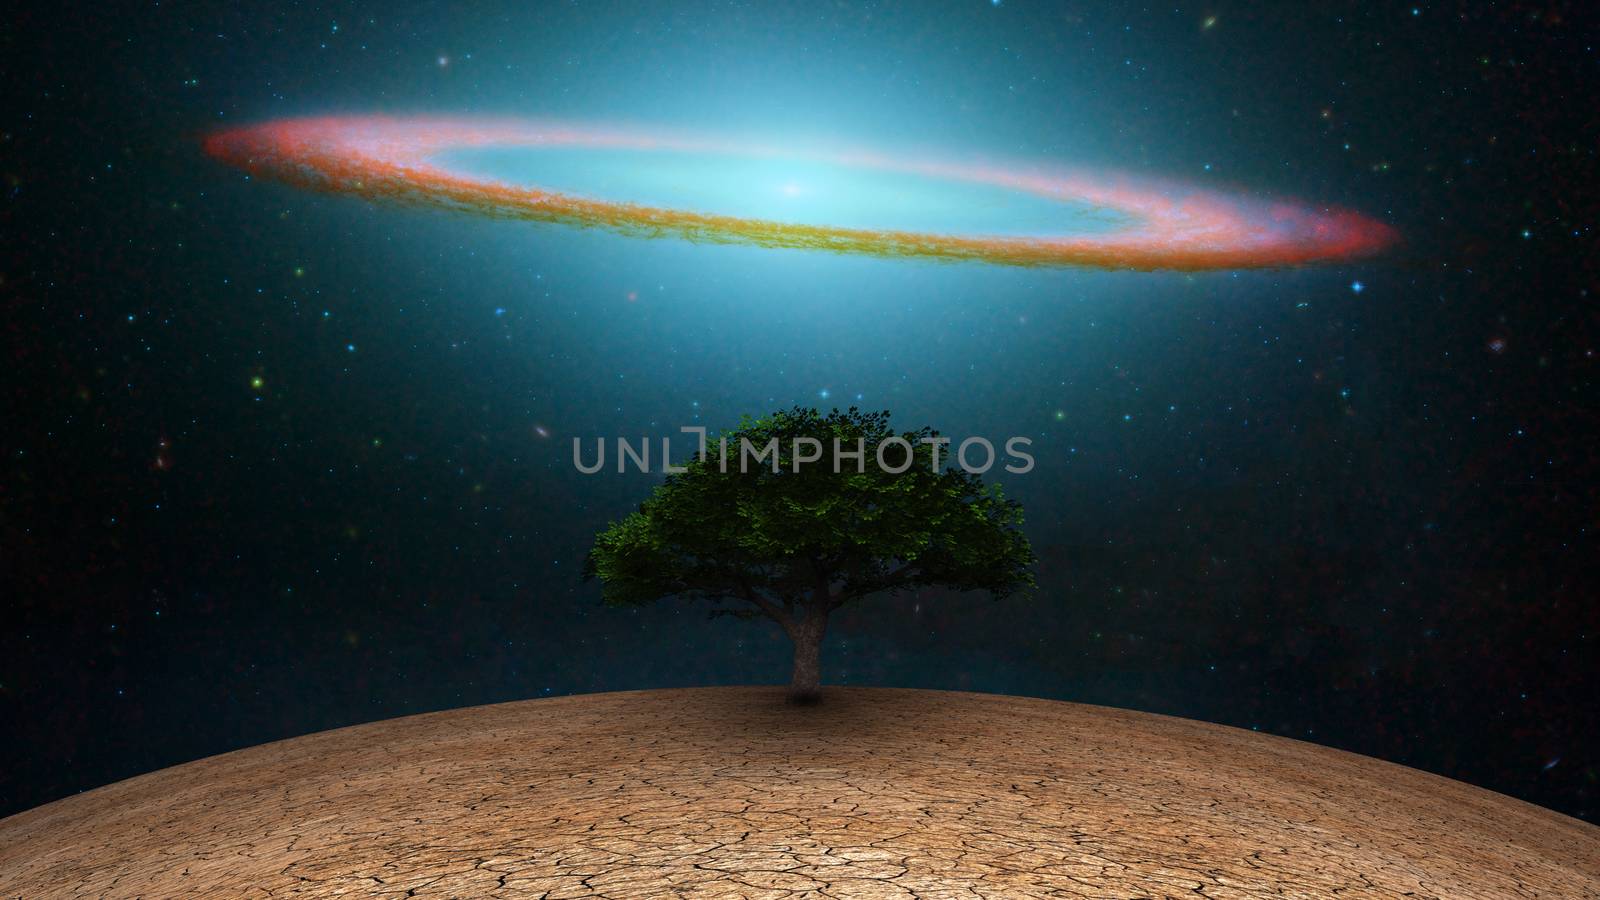 Surrealism. Green tree in arid land. Galactic disk in night sky.